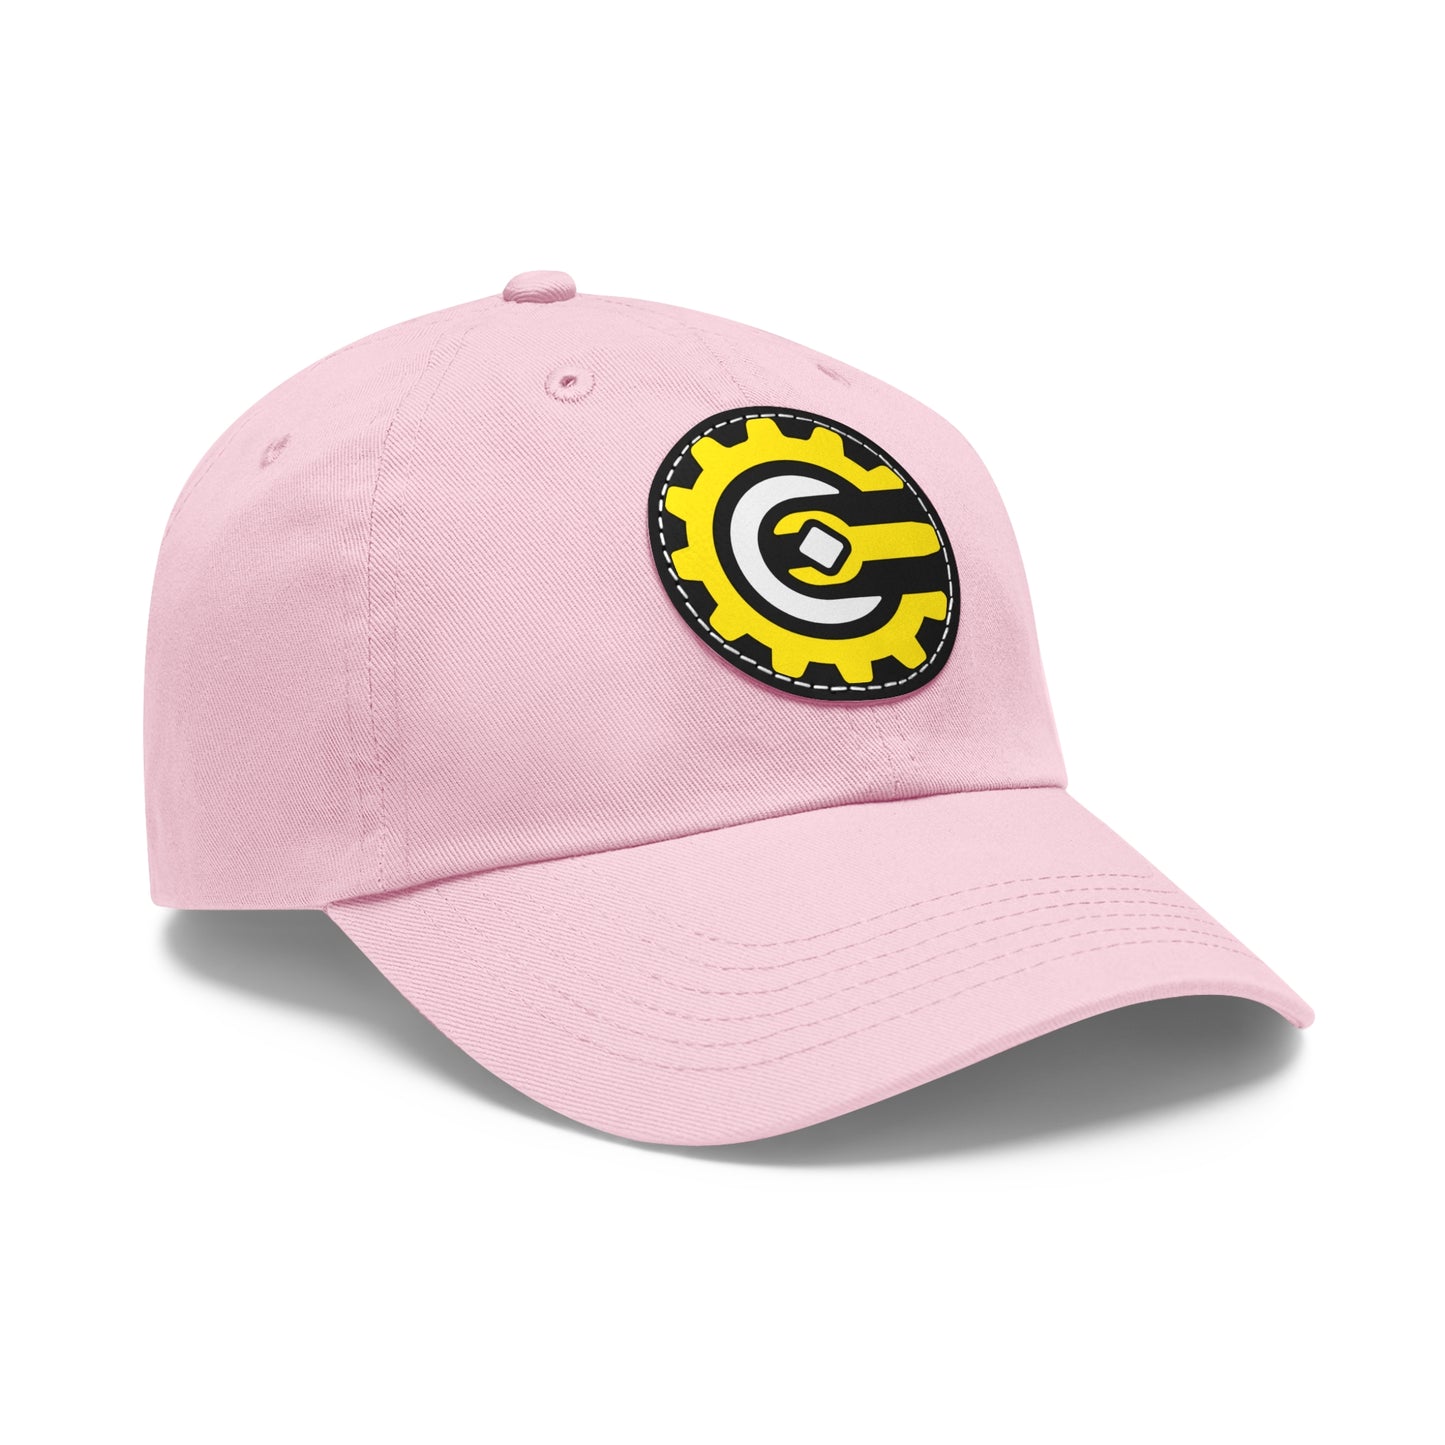 Sleek black Baseball Hat College Gear